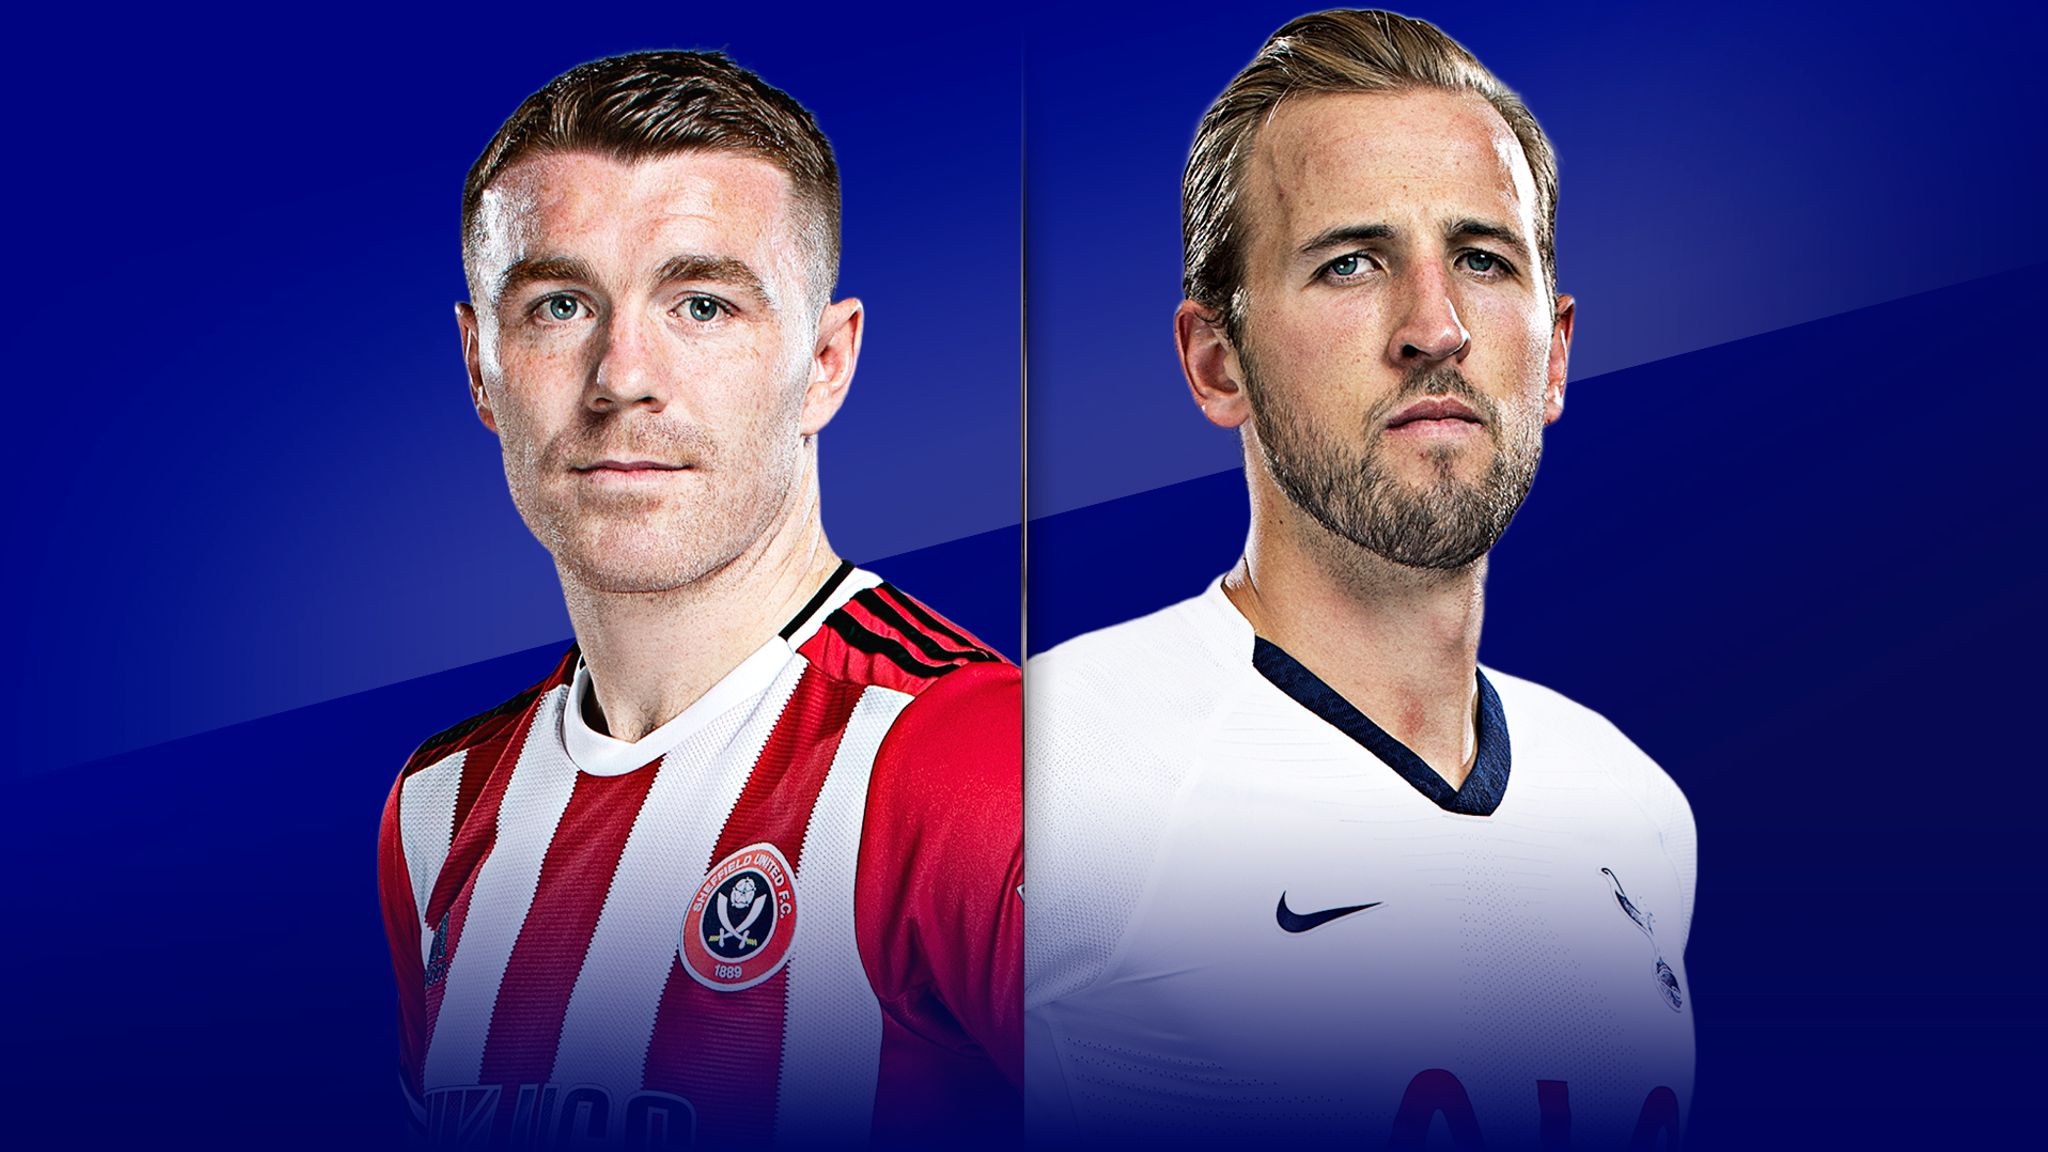 Sheffield United vs Tottenham preview, team news, prediction, kick-off, Football News